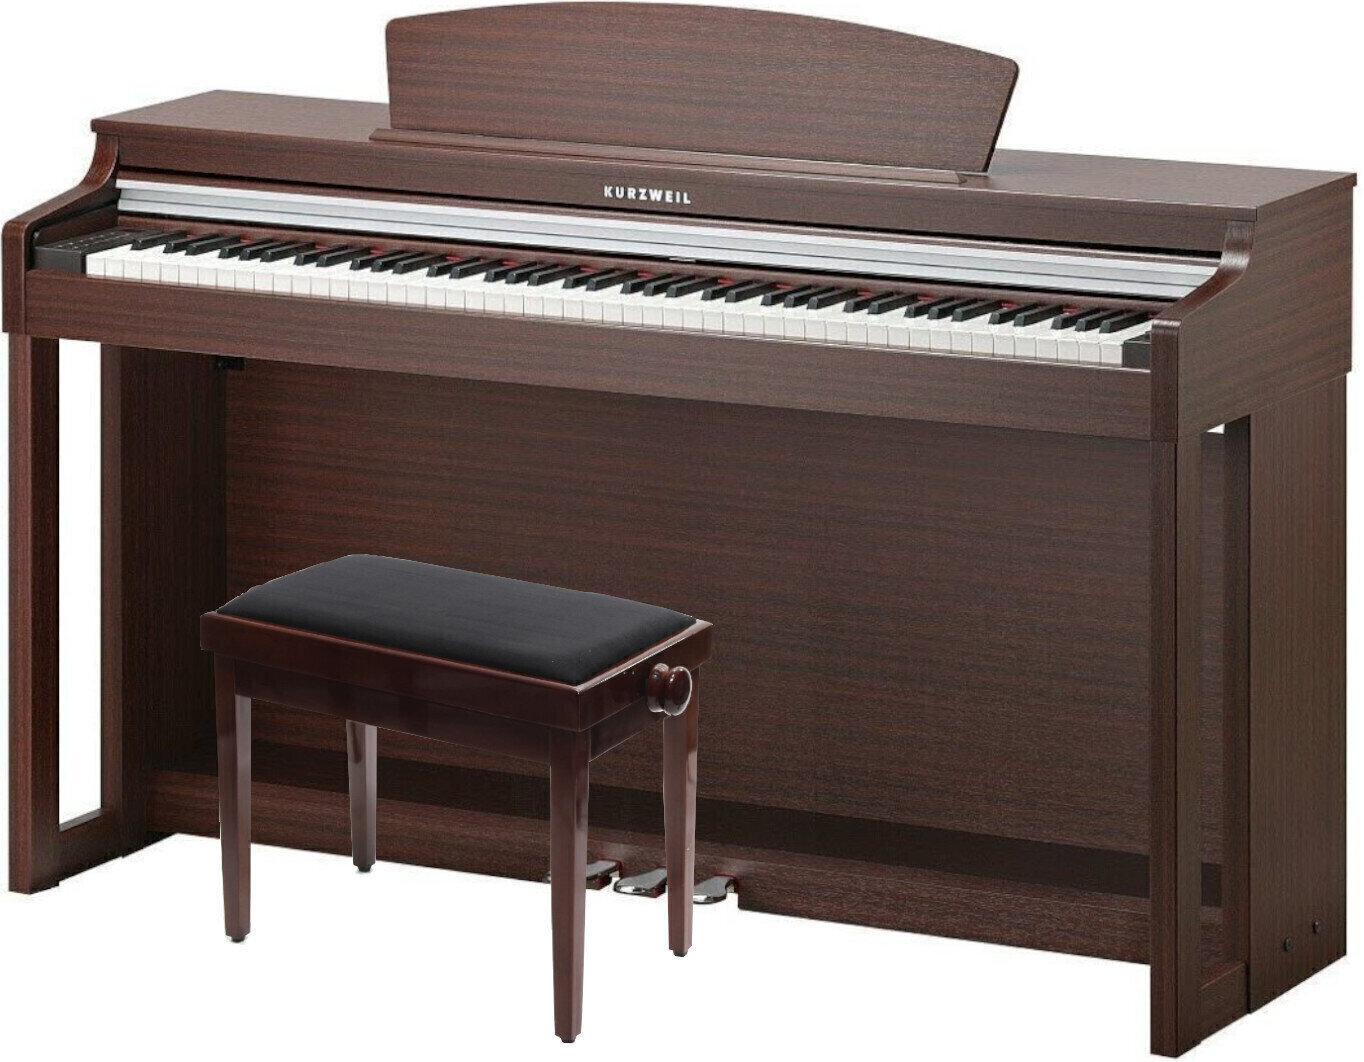 Piano digital Kurzweil MP120-SM